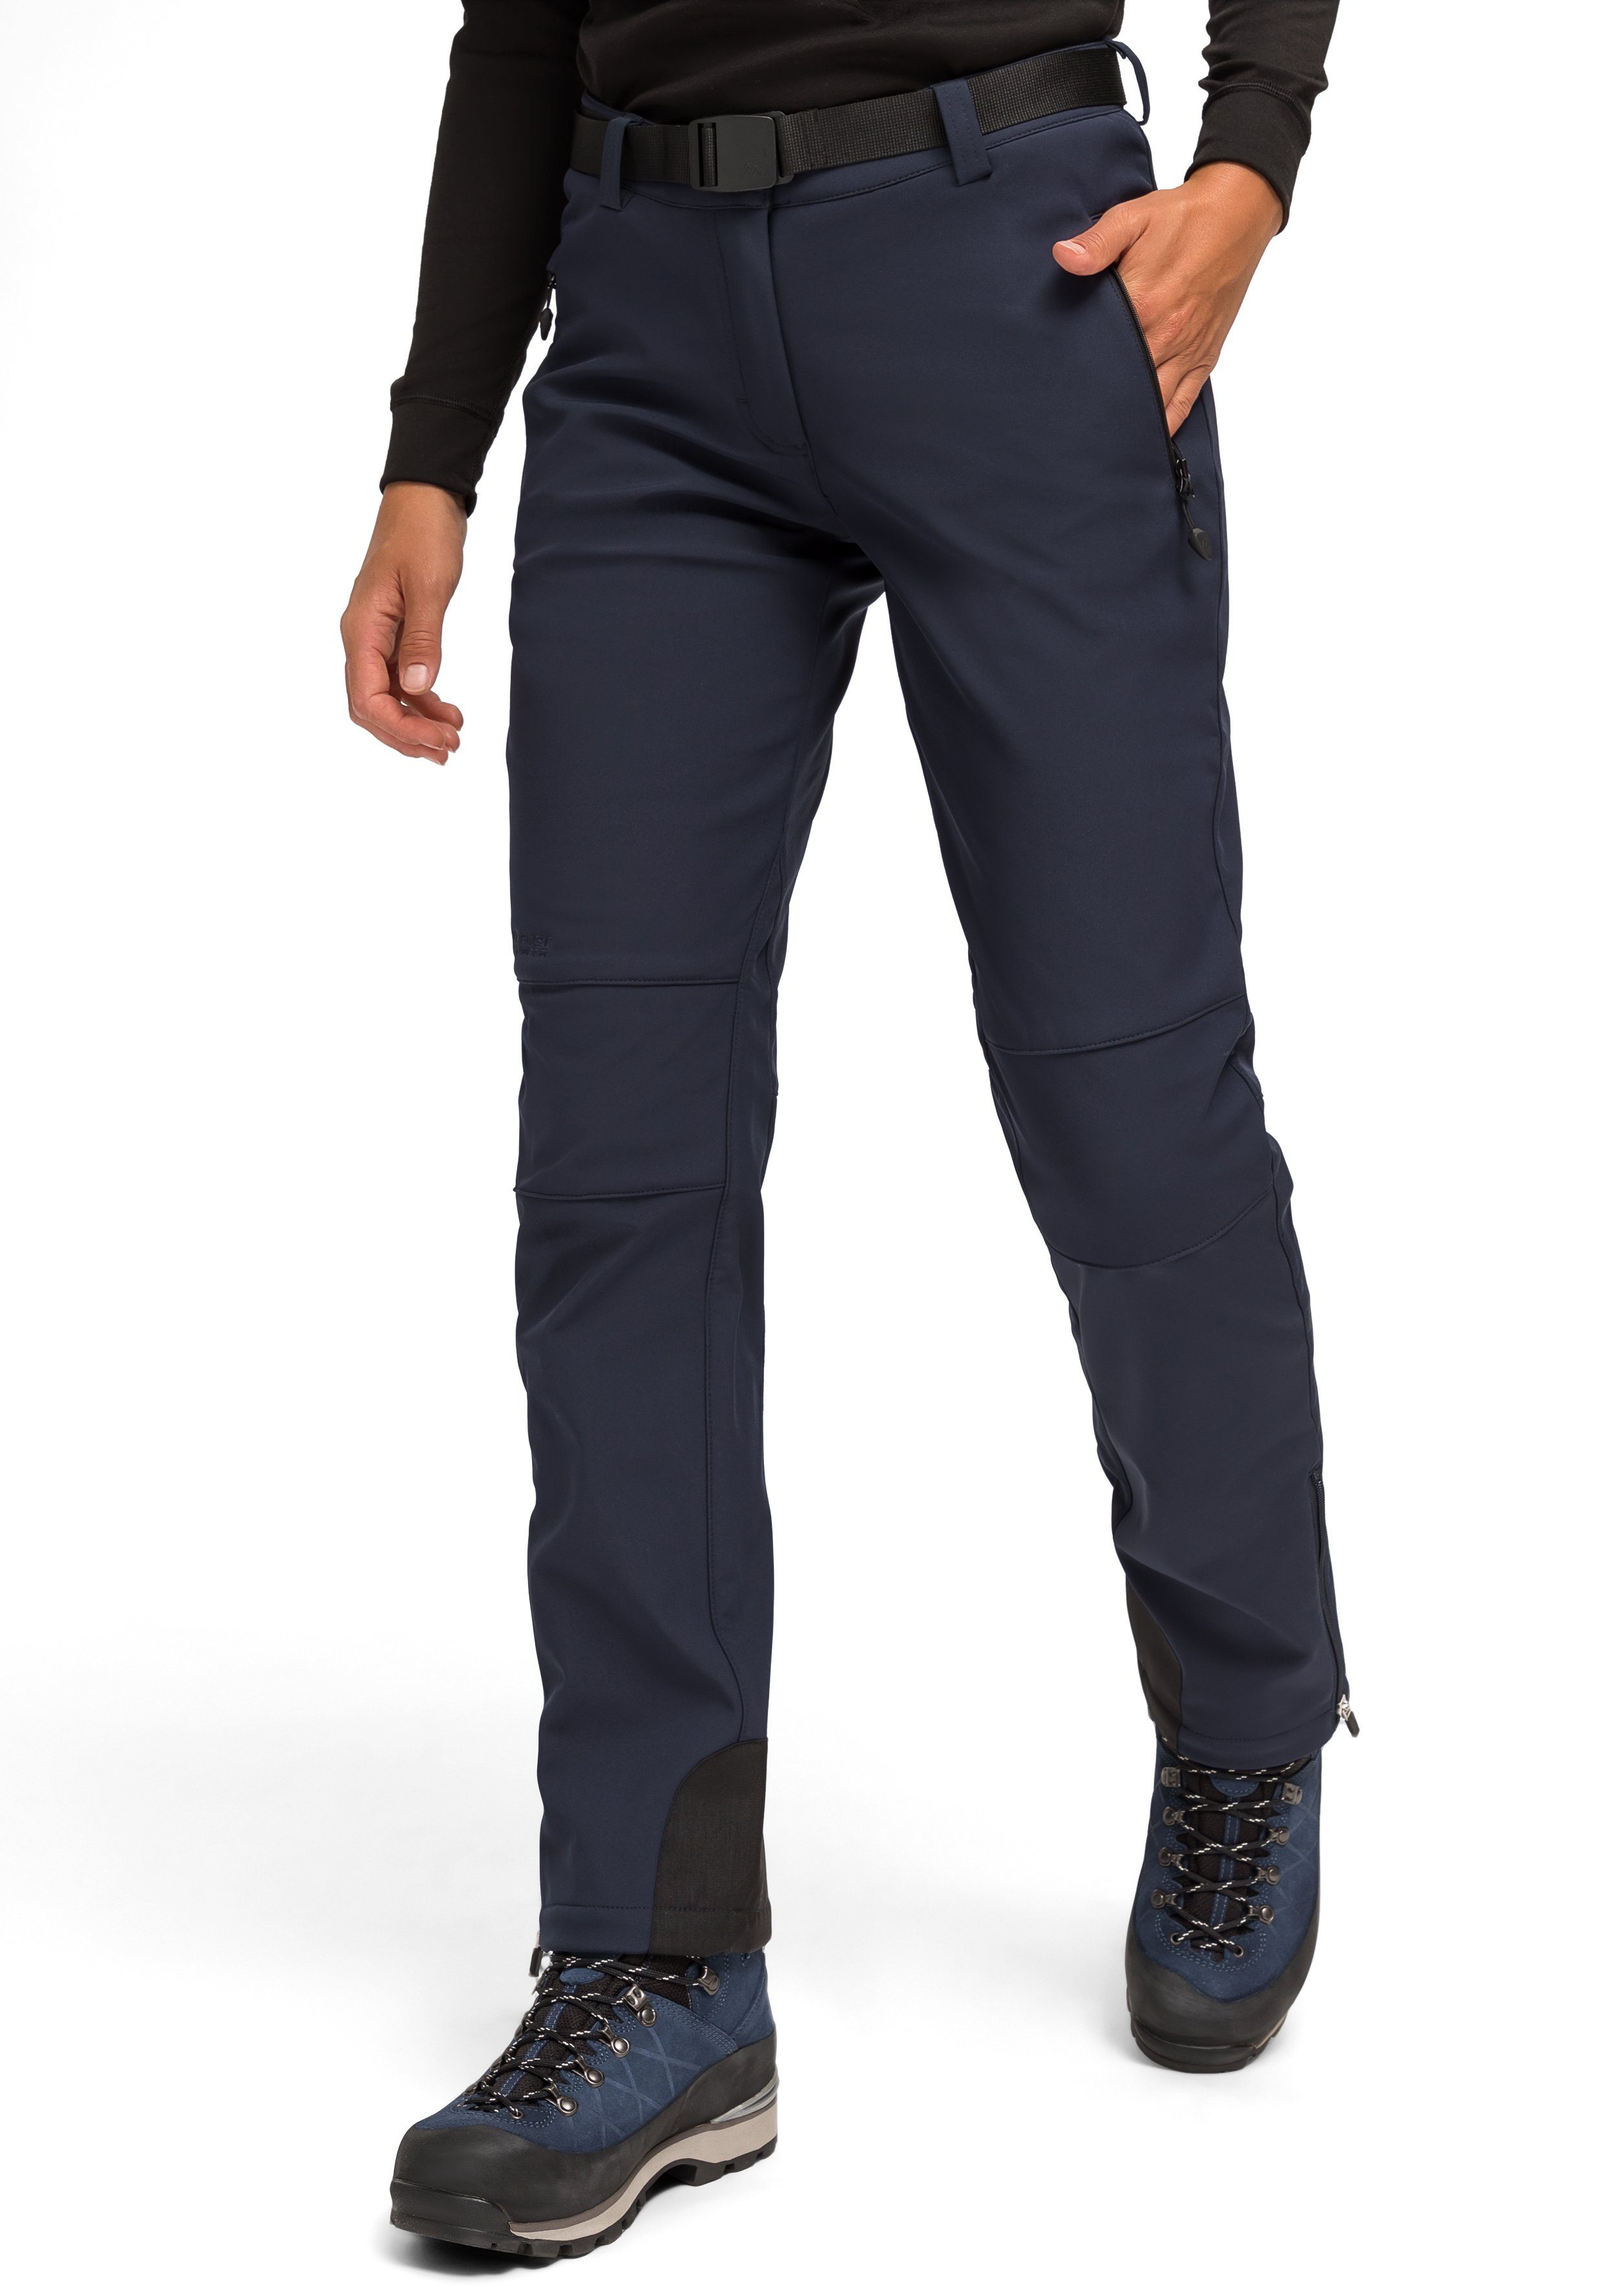 Tech W und elastisch winddicht Funktionshose Pants Warme Maier Sports Softshellhose, dunkelblau